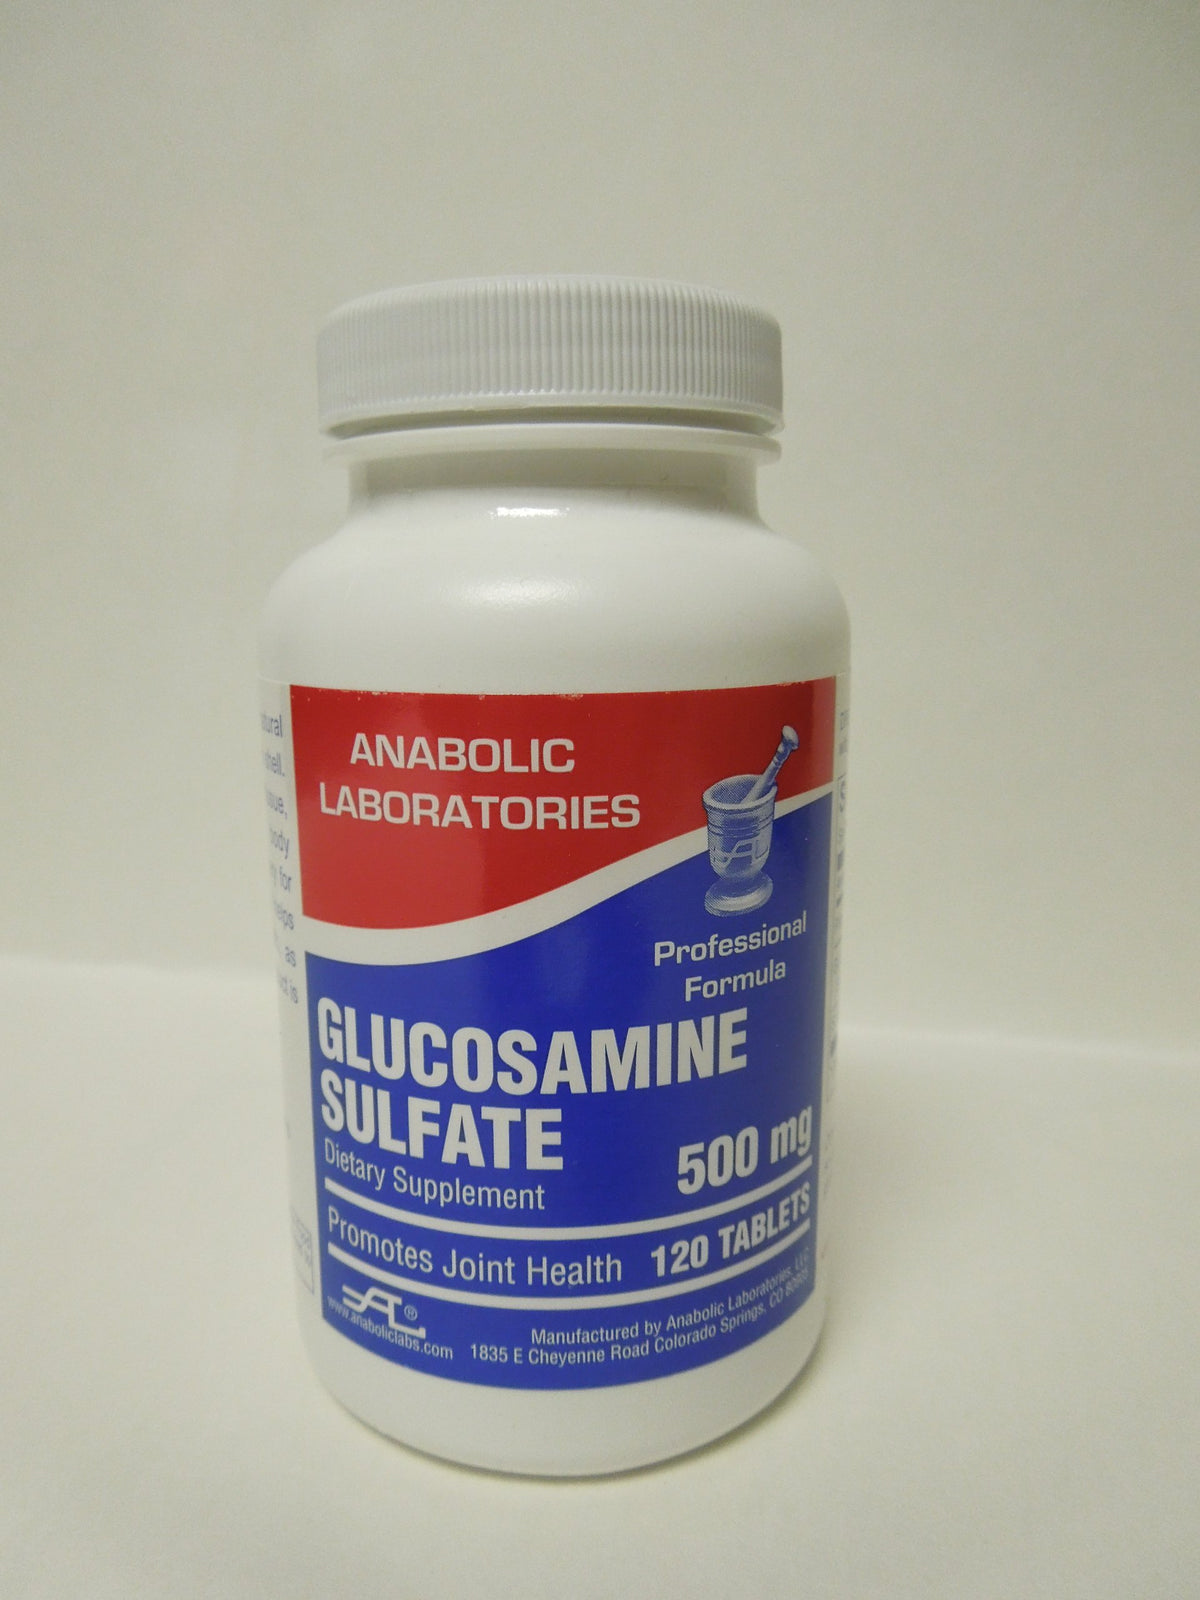 Anabolic Laboratories - Glucosamine Sulfate - 500mg - 120 Tablets